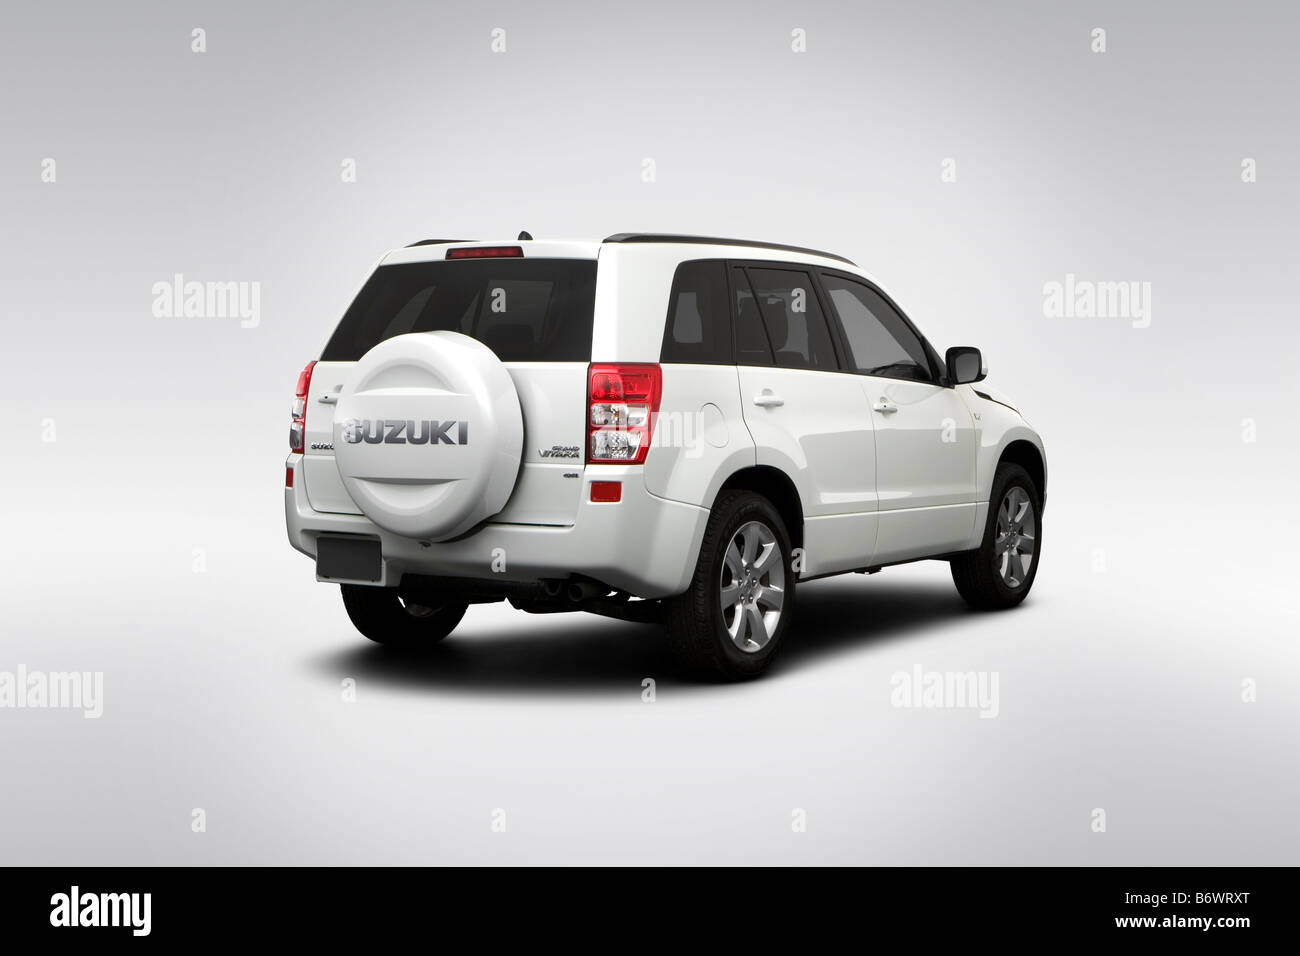 Suzuki grand vitara fotografías e imágenes de alta resolución - Alamy